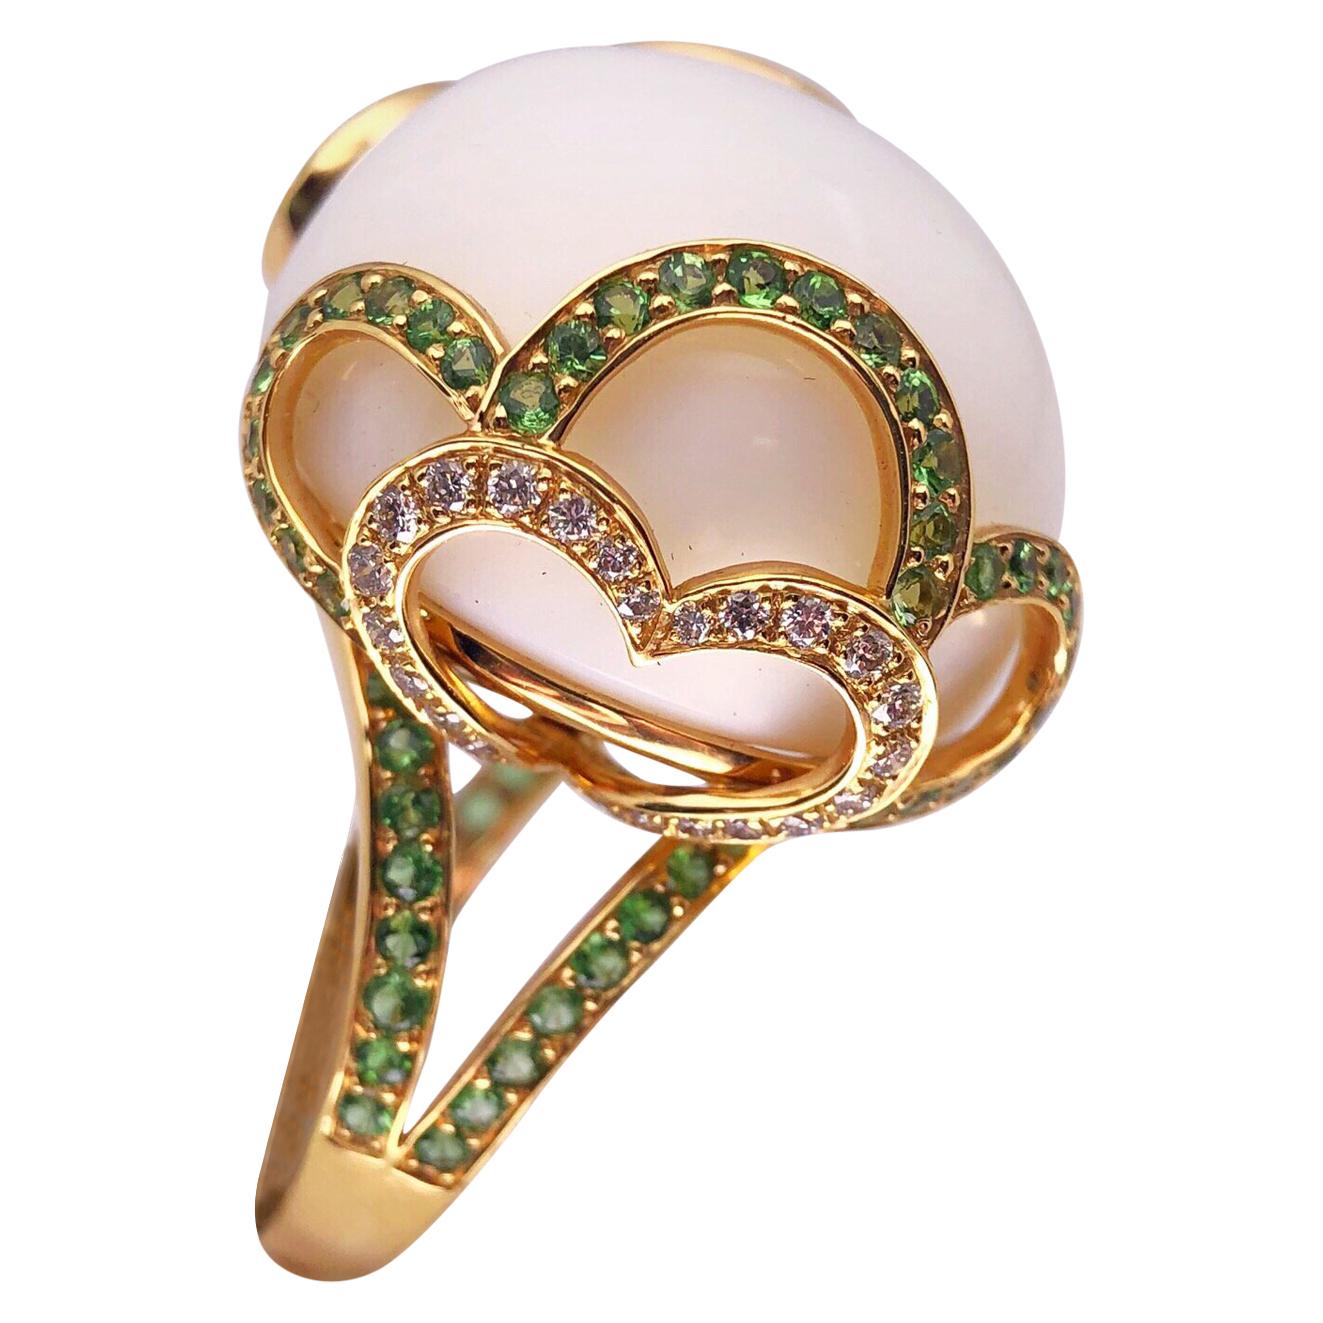 Zorab Creation 18 Karat Gold, 37.89 Carat White Opal, Tsavorite and Diamond Ring For Sale